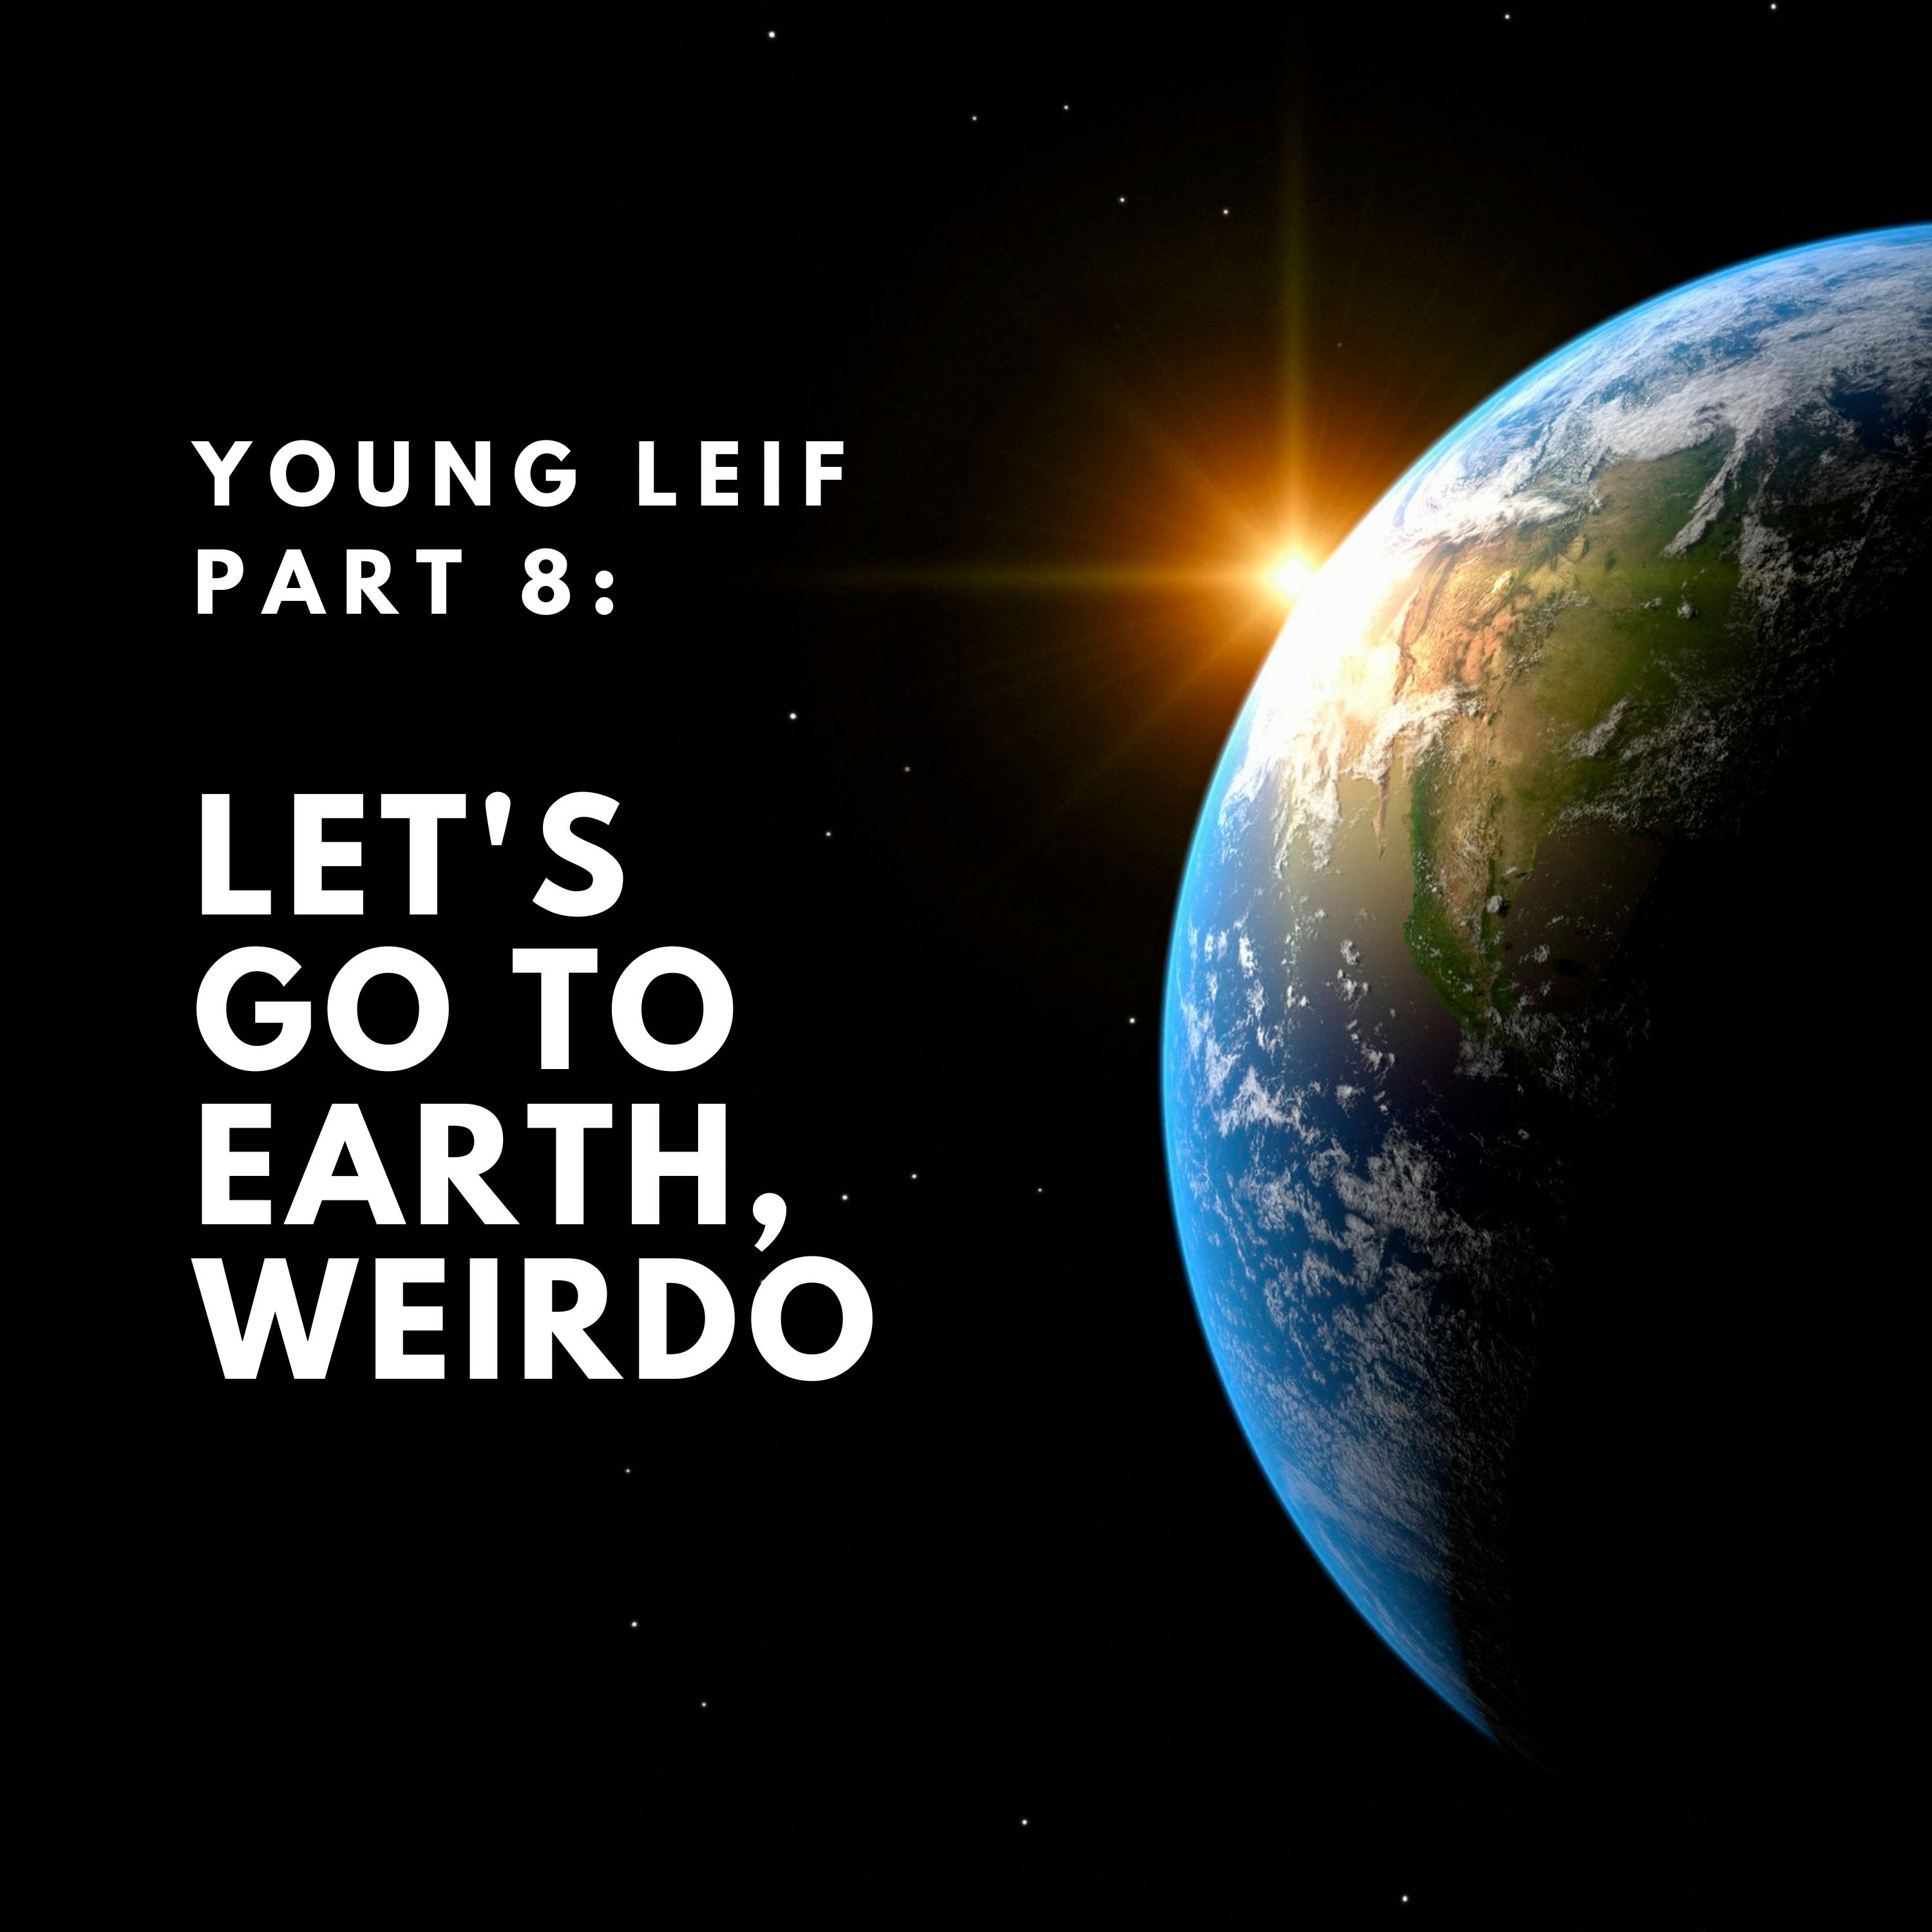 Young Leif Part 8: Let's Go to Earth, Weirdo.